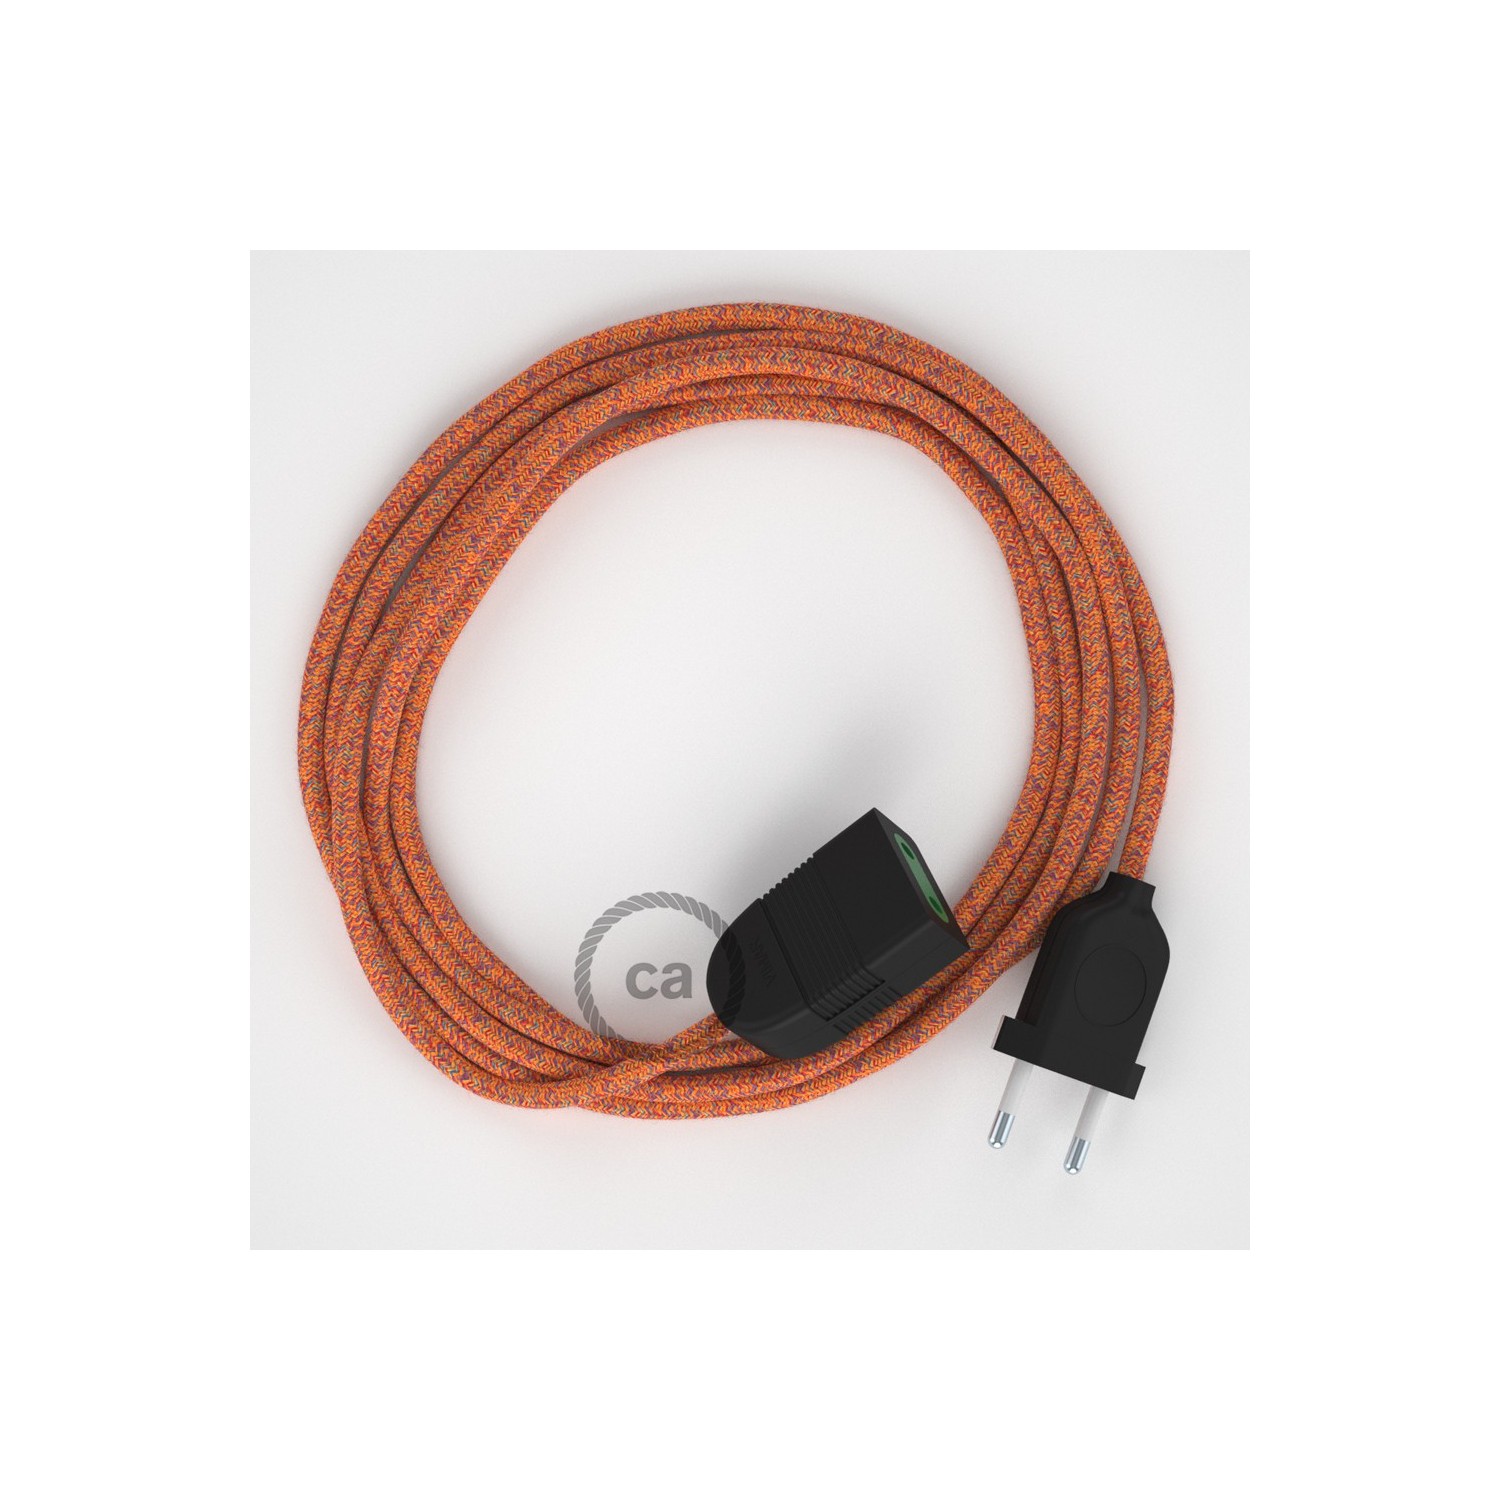 Rallonge électrique avec câble textile RX07 Coton Indian Summer 2P 10A Made in Italy.